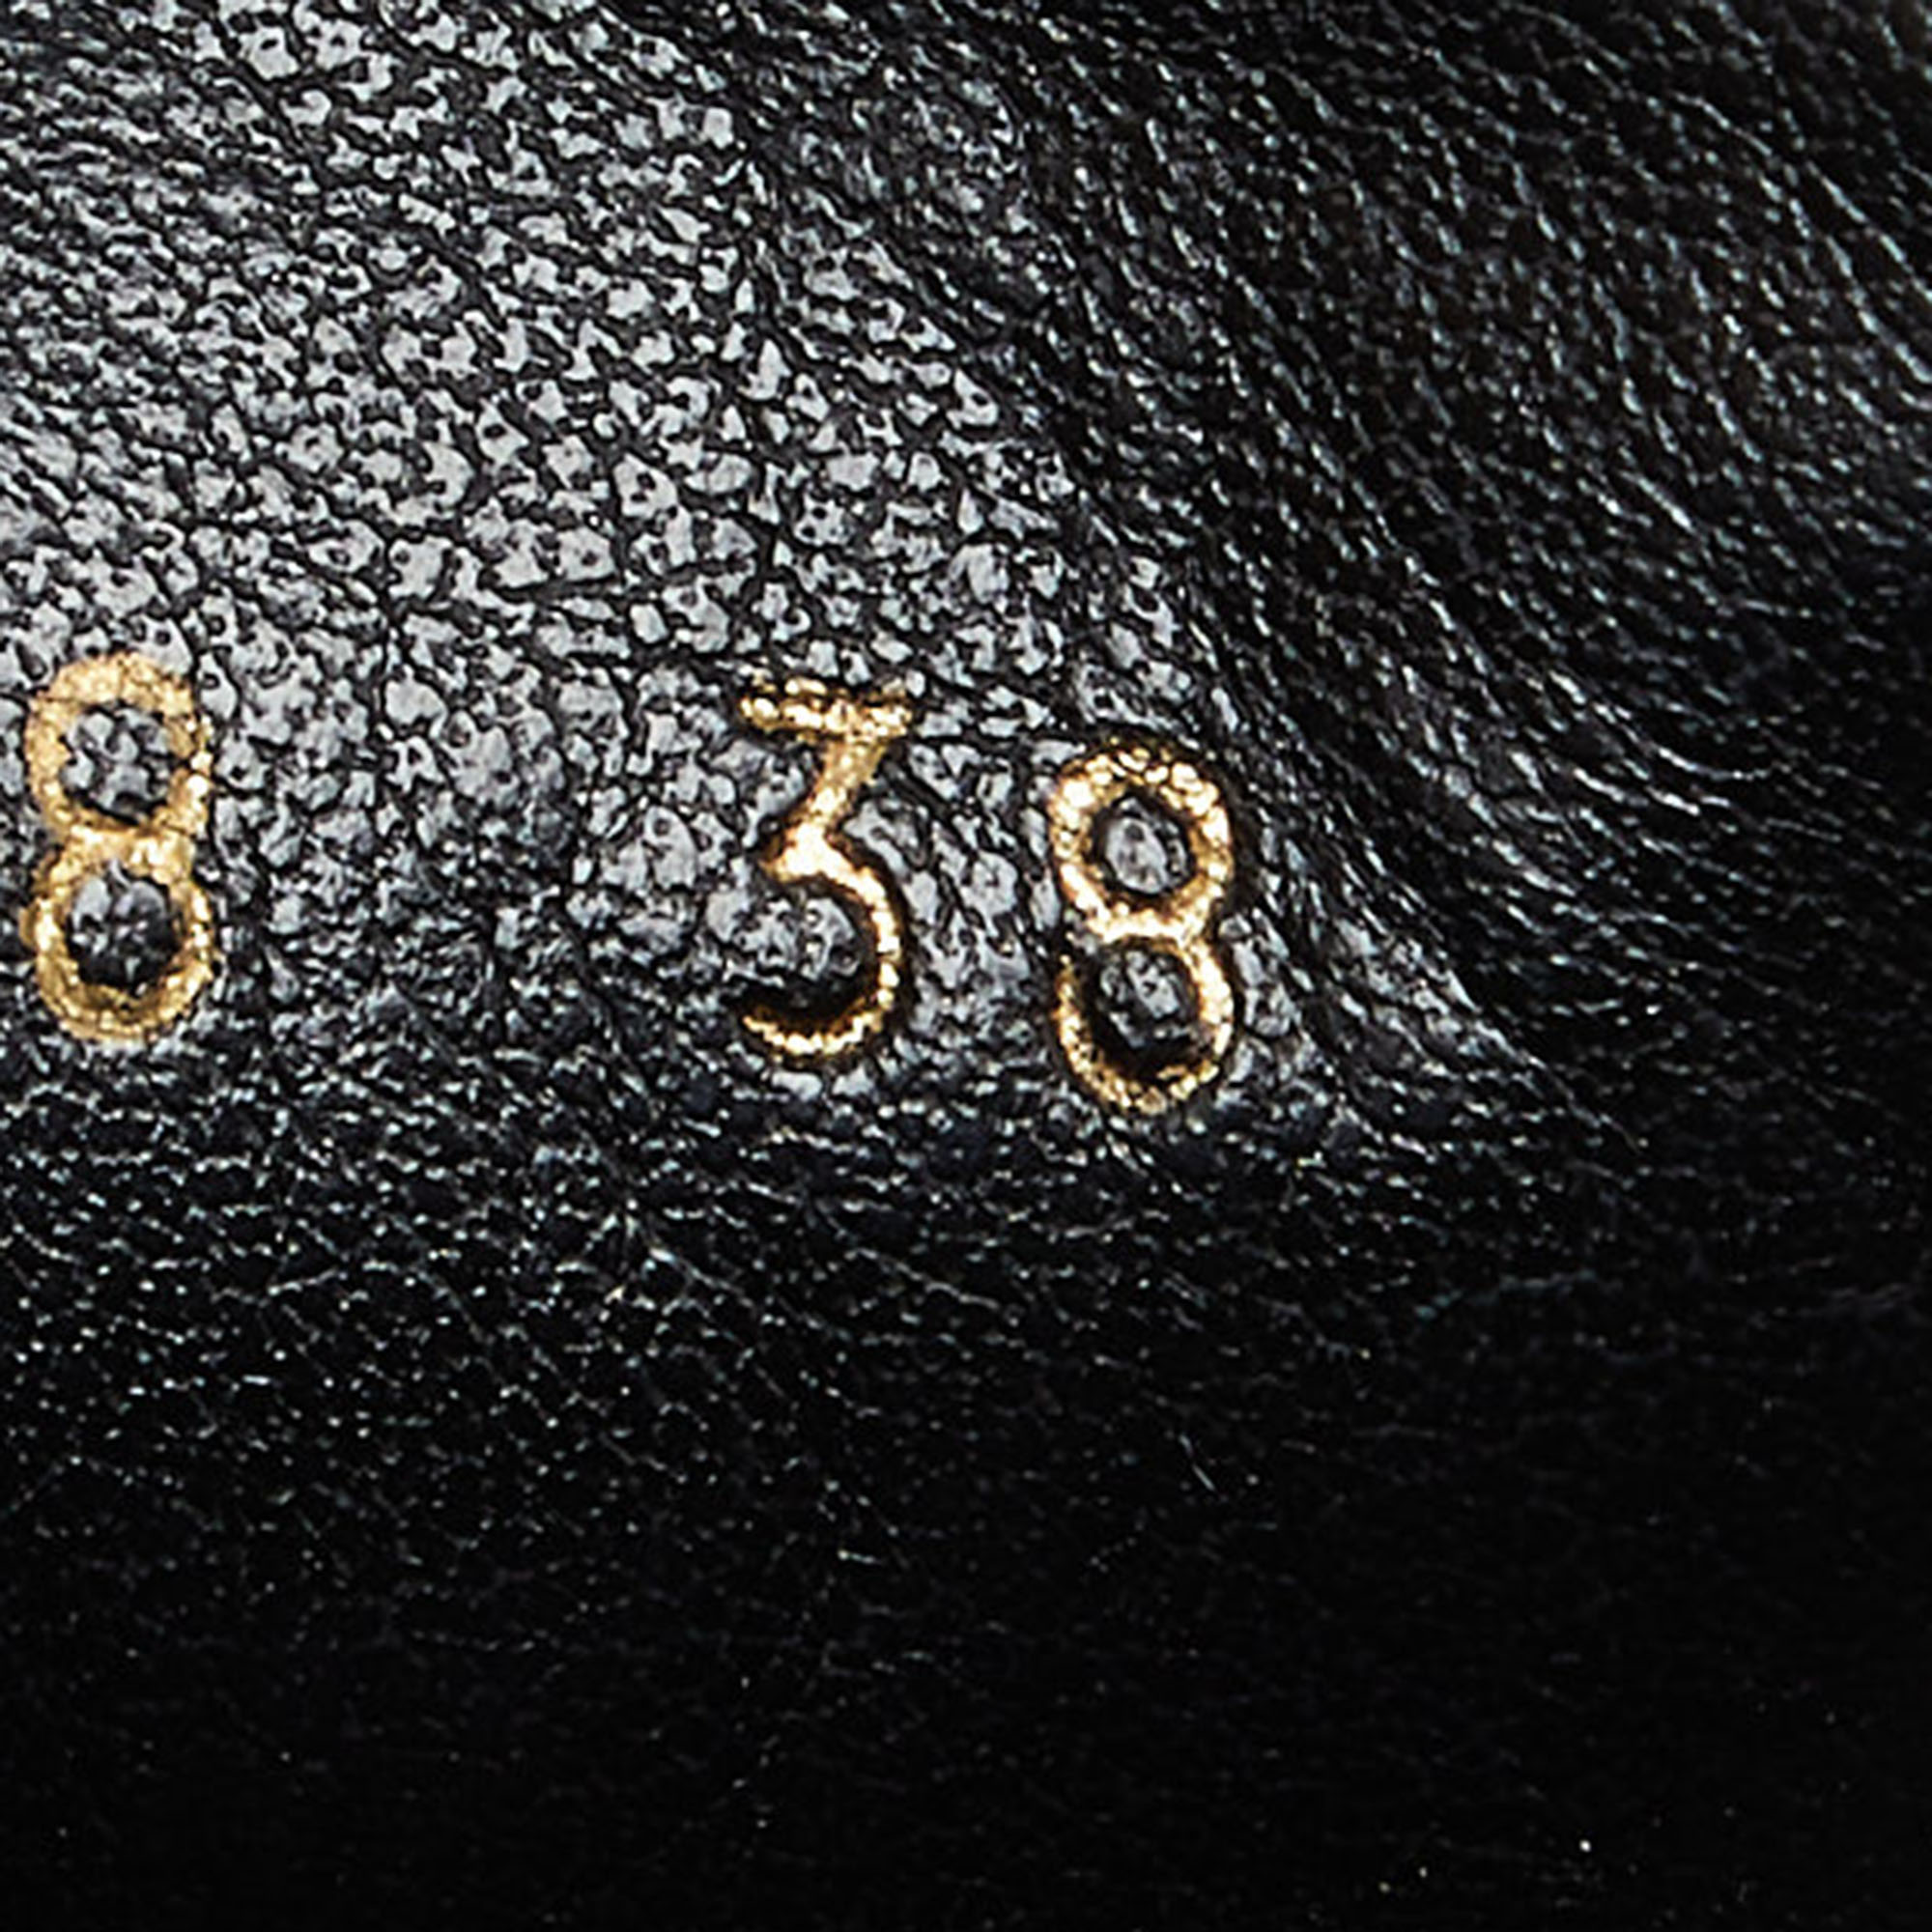 Stella McCartney Black Faux Leather Platform Sneakers Size 38